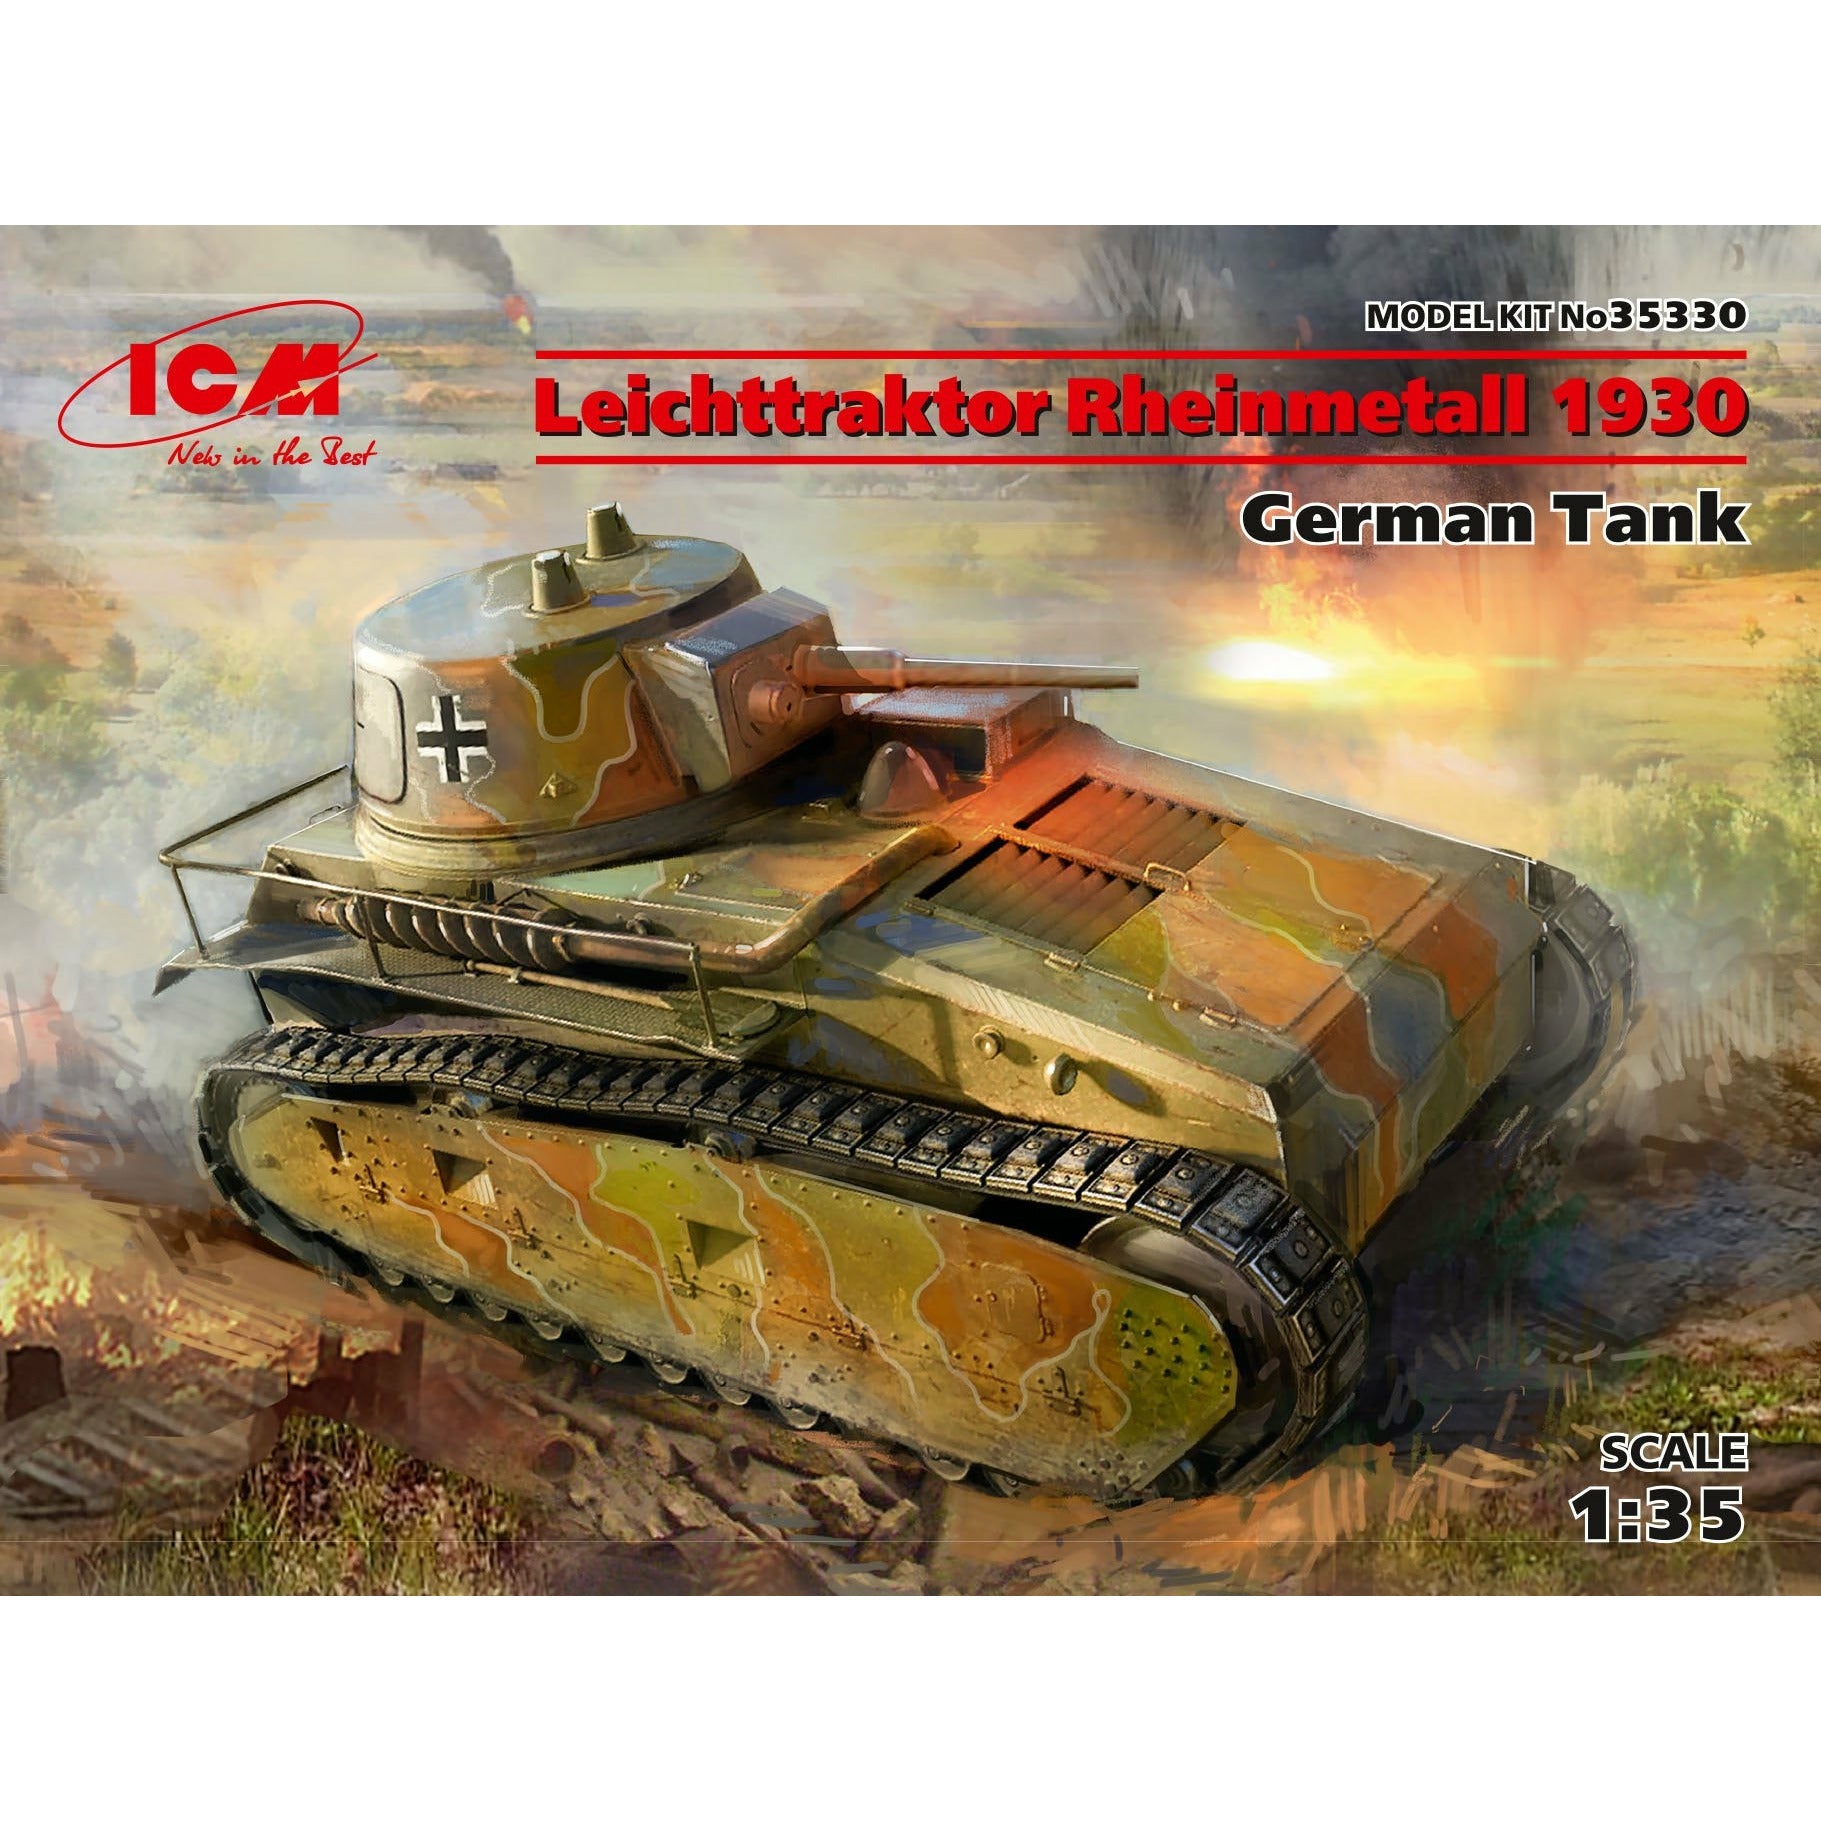 Leichttraktor Rheinmetall 1930, German Tank (100% new molds) 1/35 #35330 by ICM